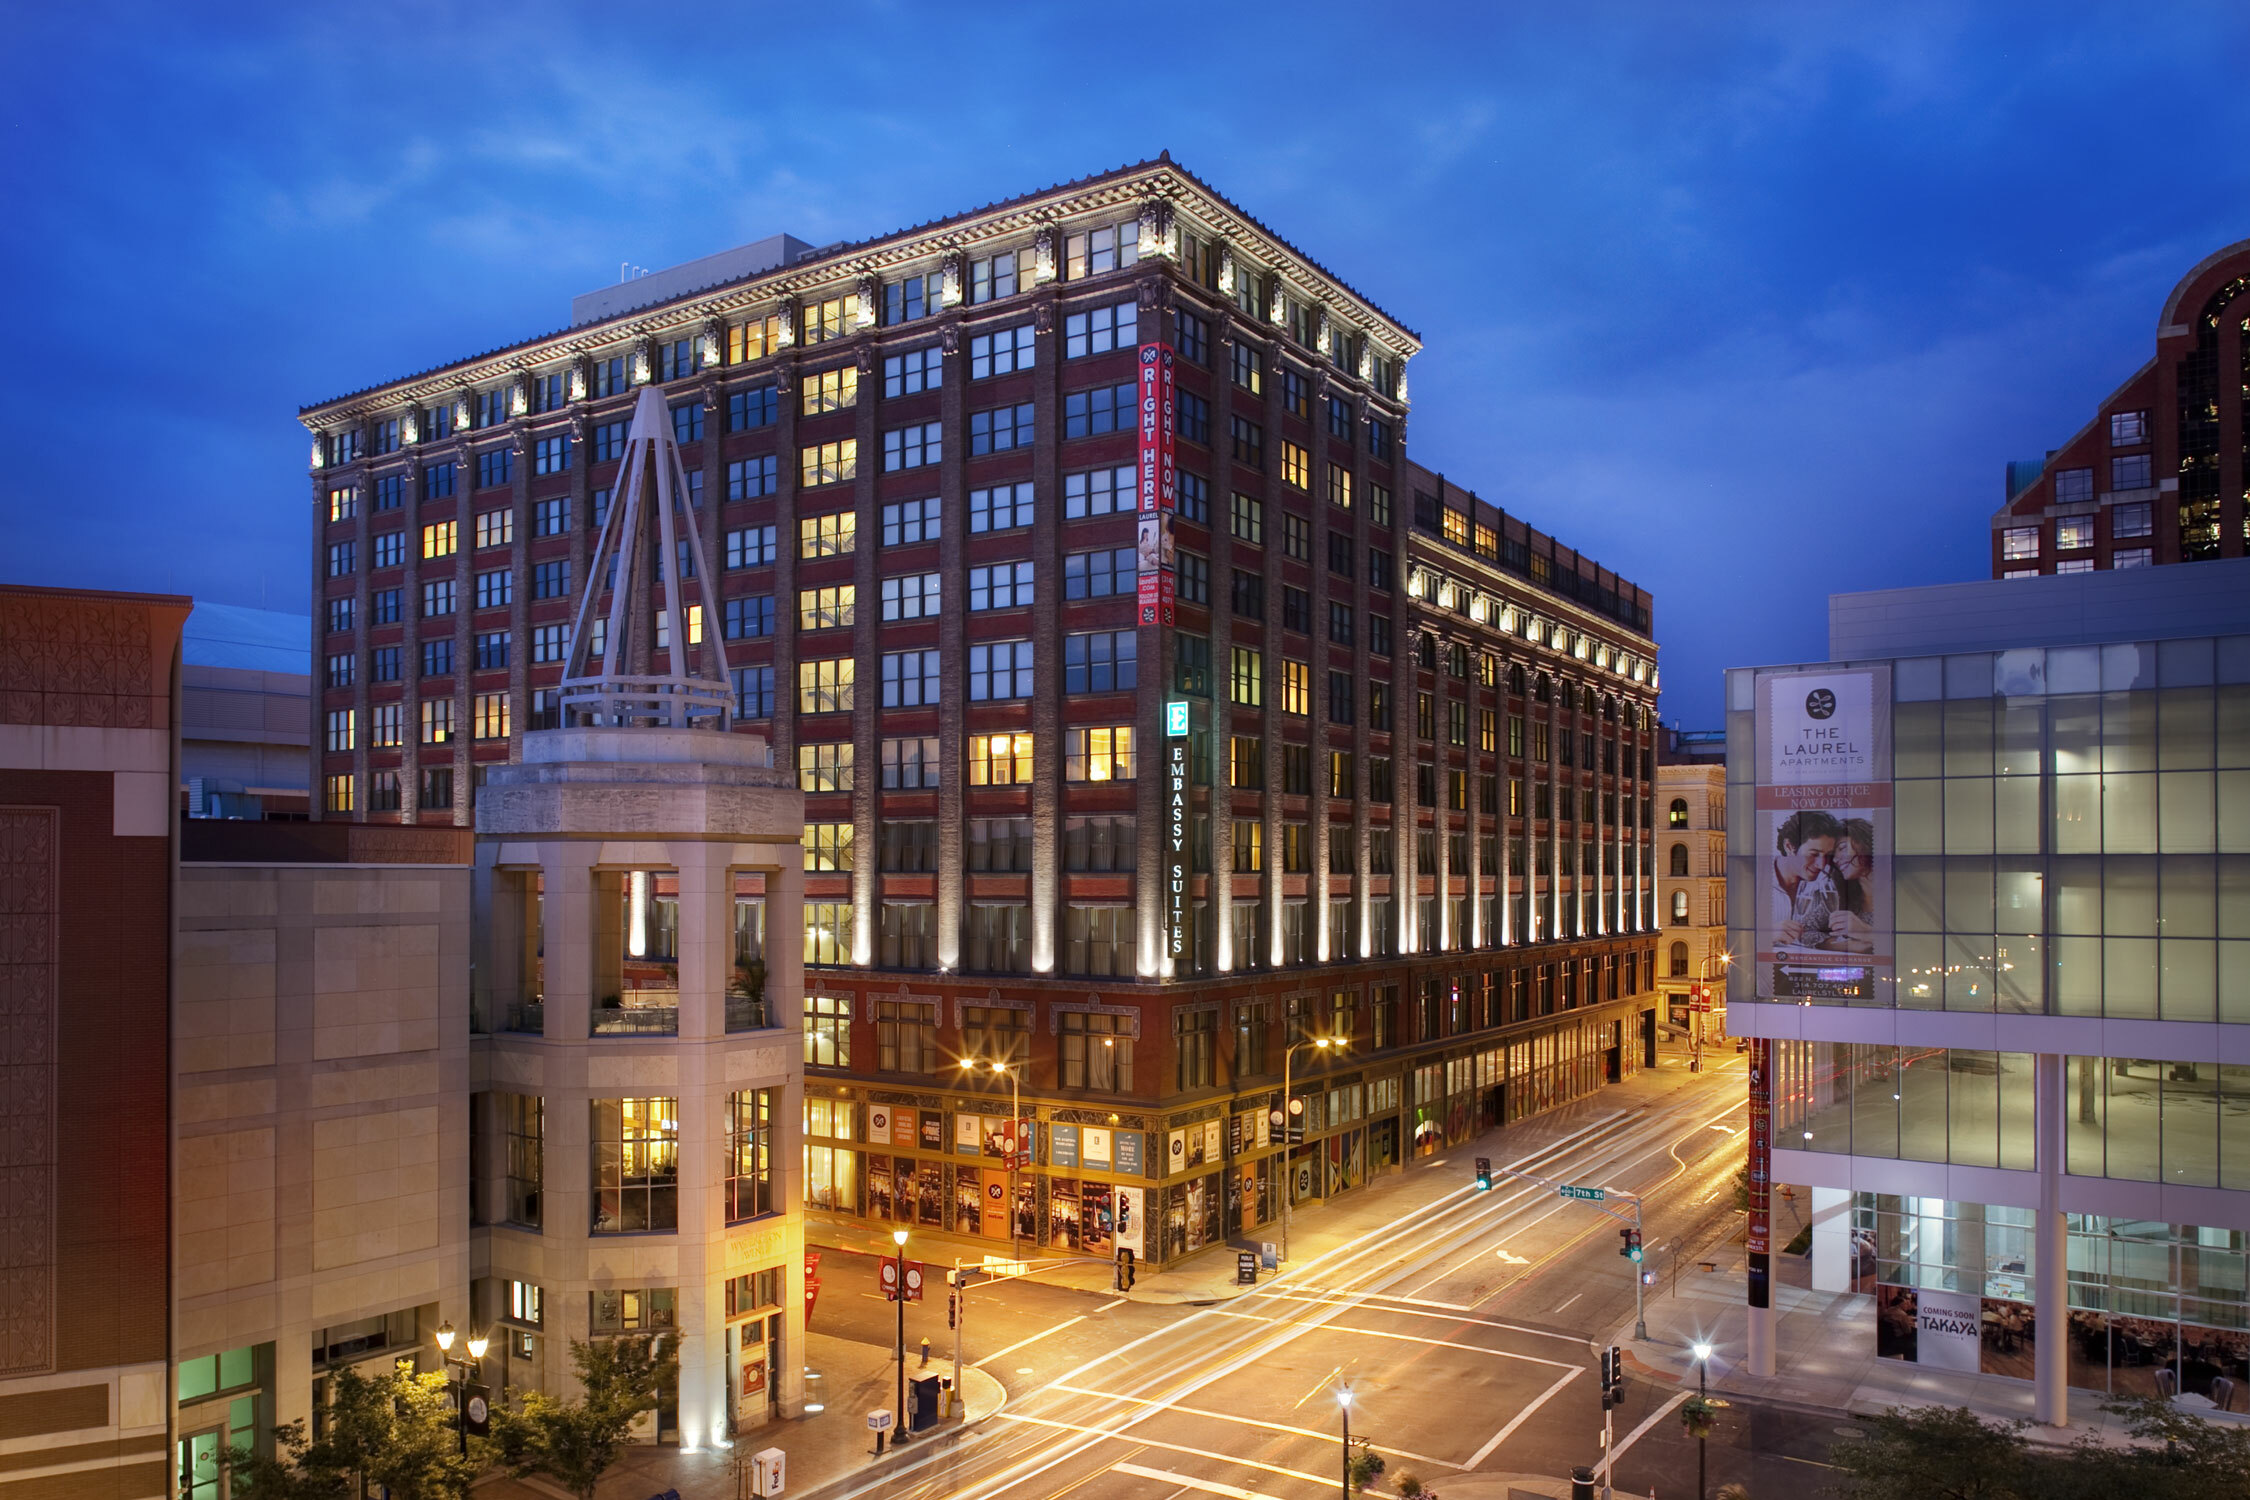 Photo of Embassy Suites by Hilton St. Louis Downtown, Saint Louis, MO